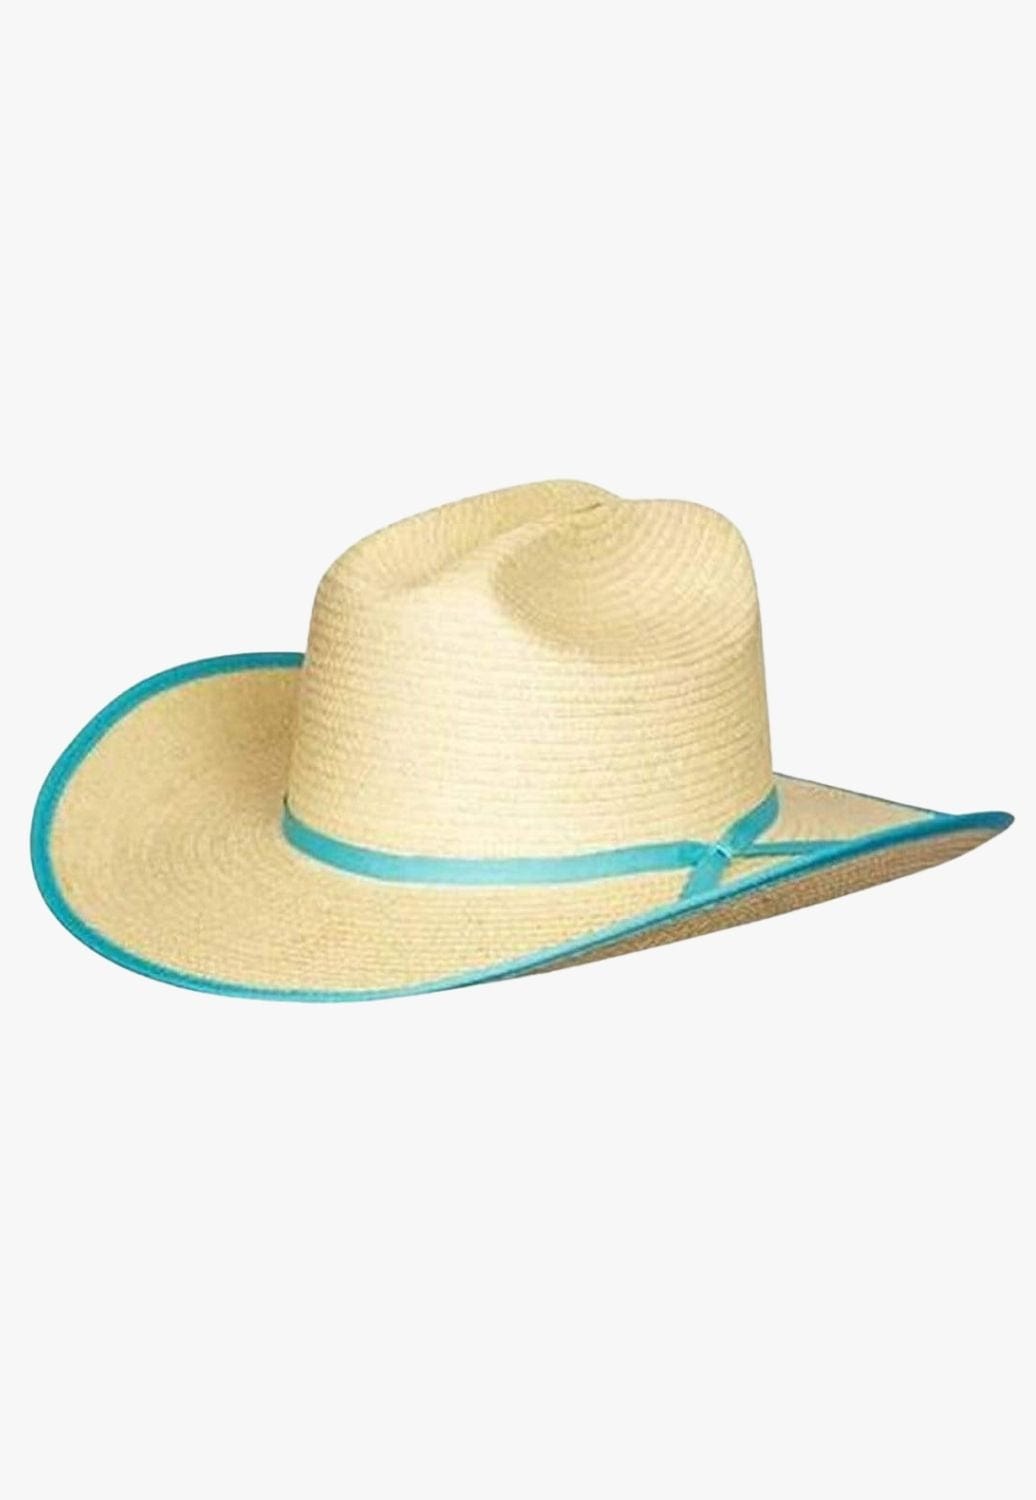 Sunbody HATS - Straw OSFA / Turquoise Sunbody Kids Cattleman Bound Guat Hat Turquoise